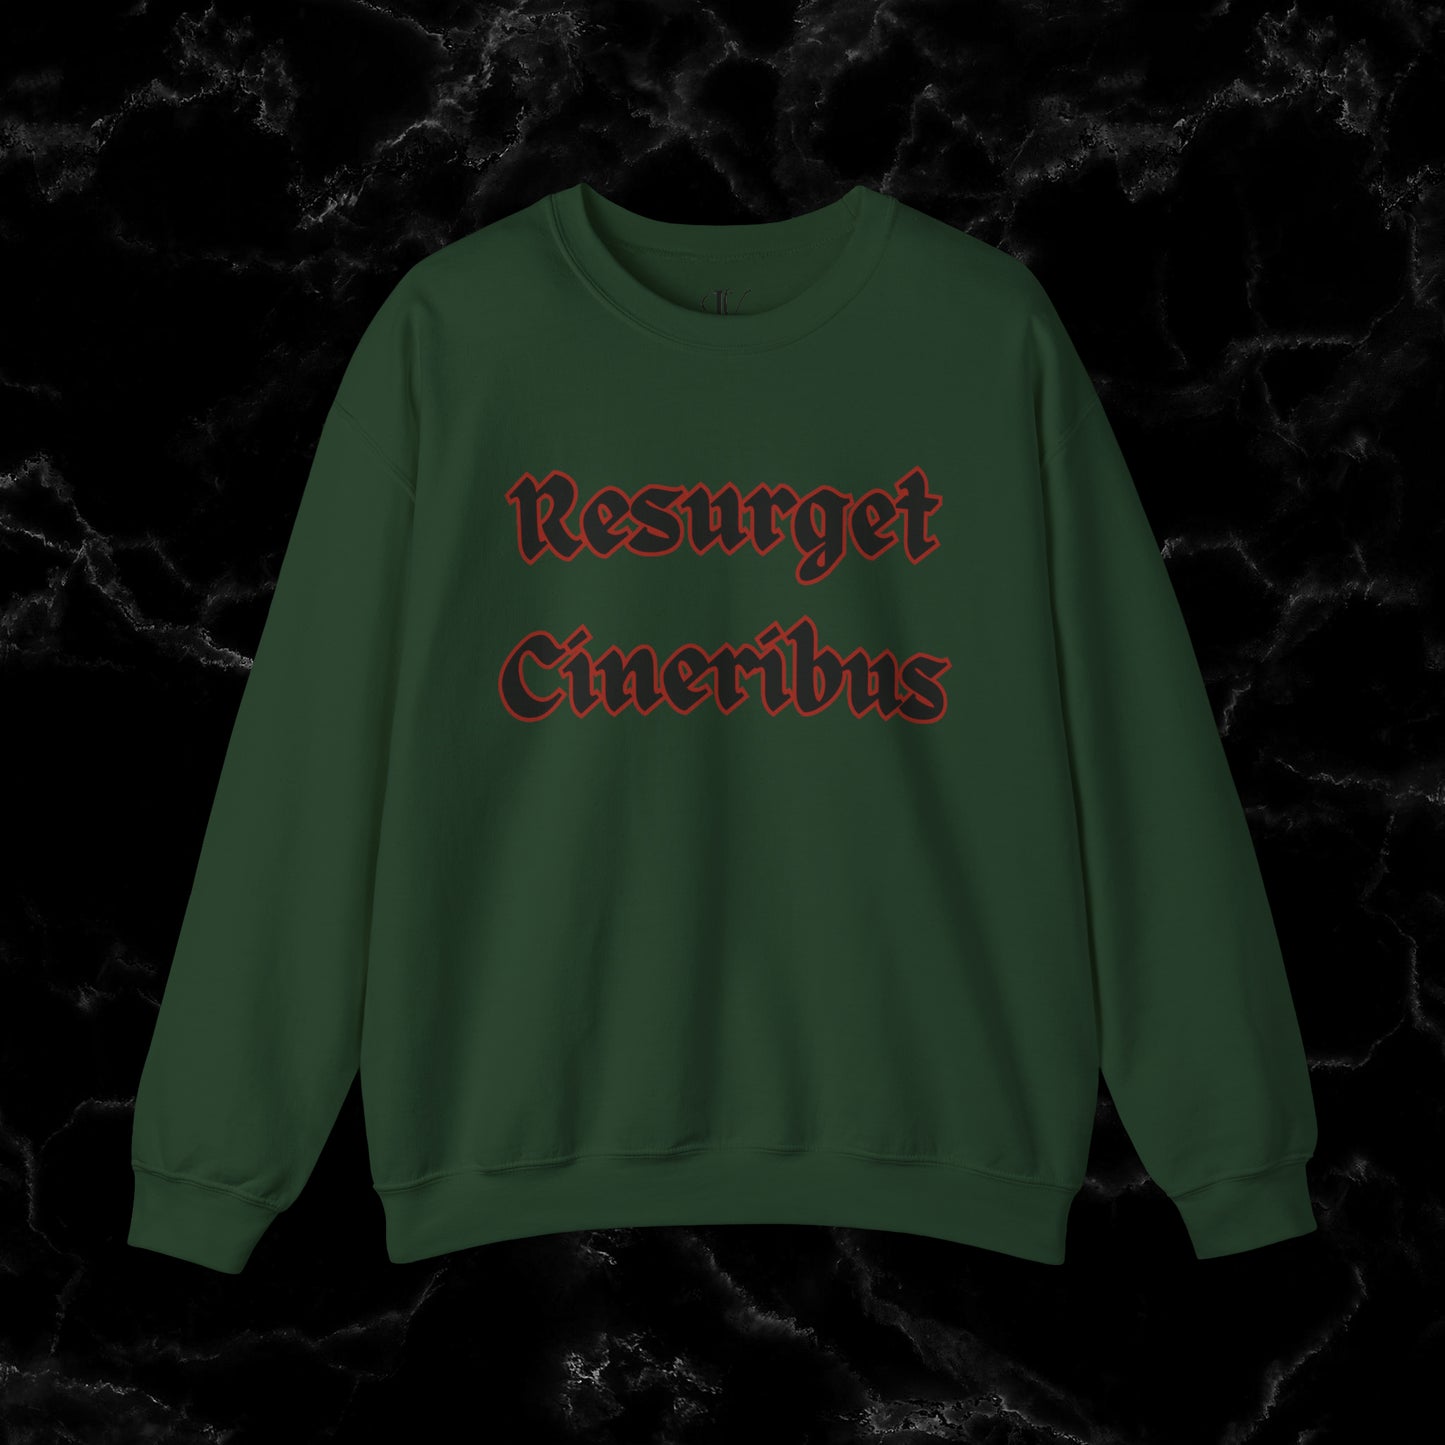 Resurget Cineribus Unisex Crewneck Sweatshirt - Latin Inspirational Gifts for Sports Football Fans Sweatshirt S Forest Green 